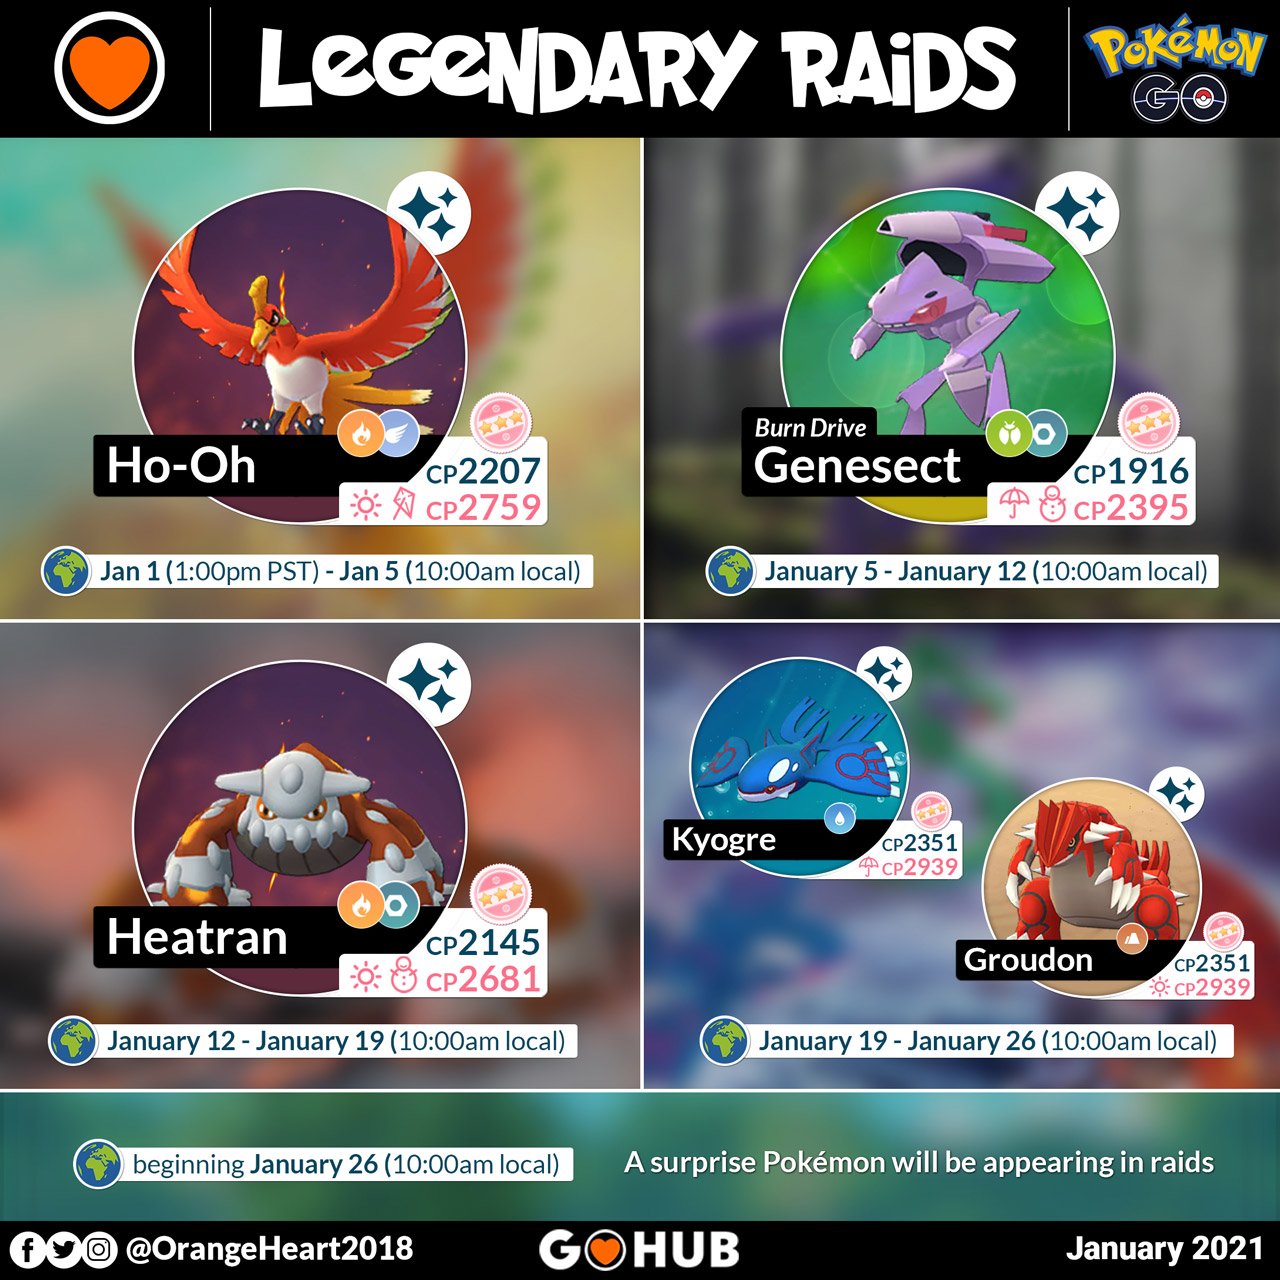 Legendary raids are here!